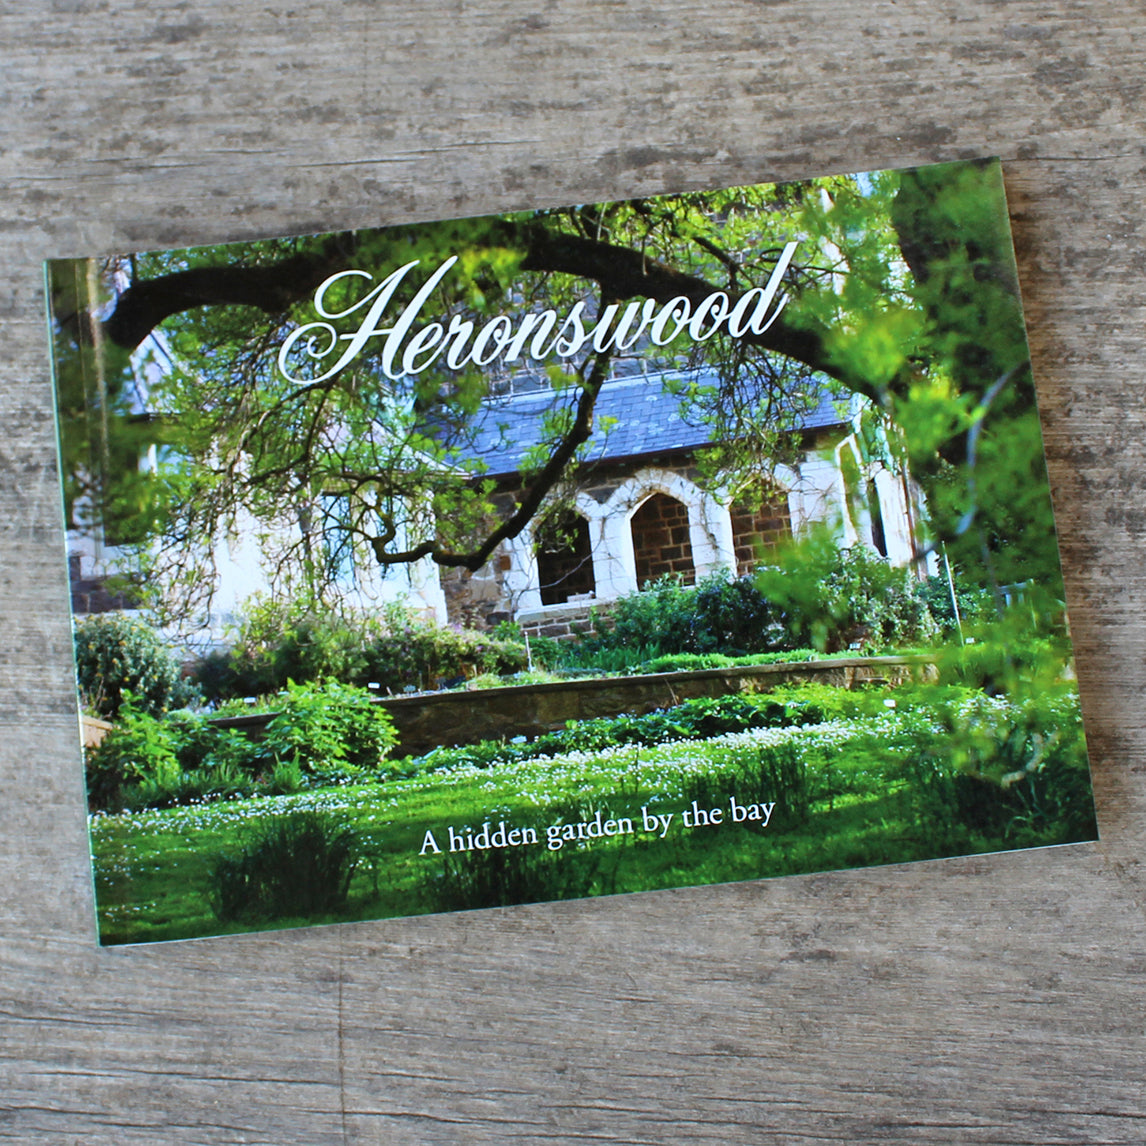 Heronswood garden in pictures